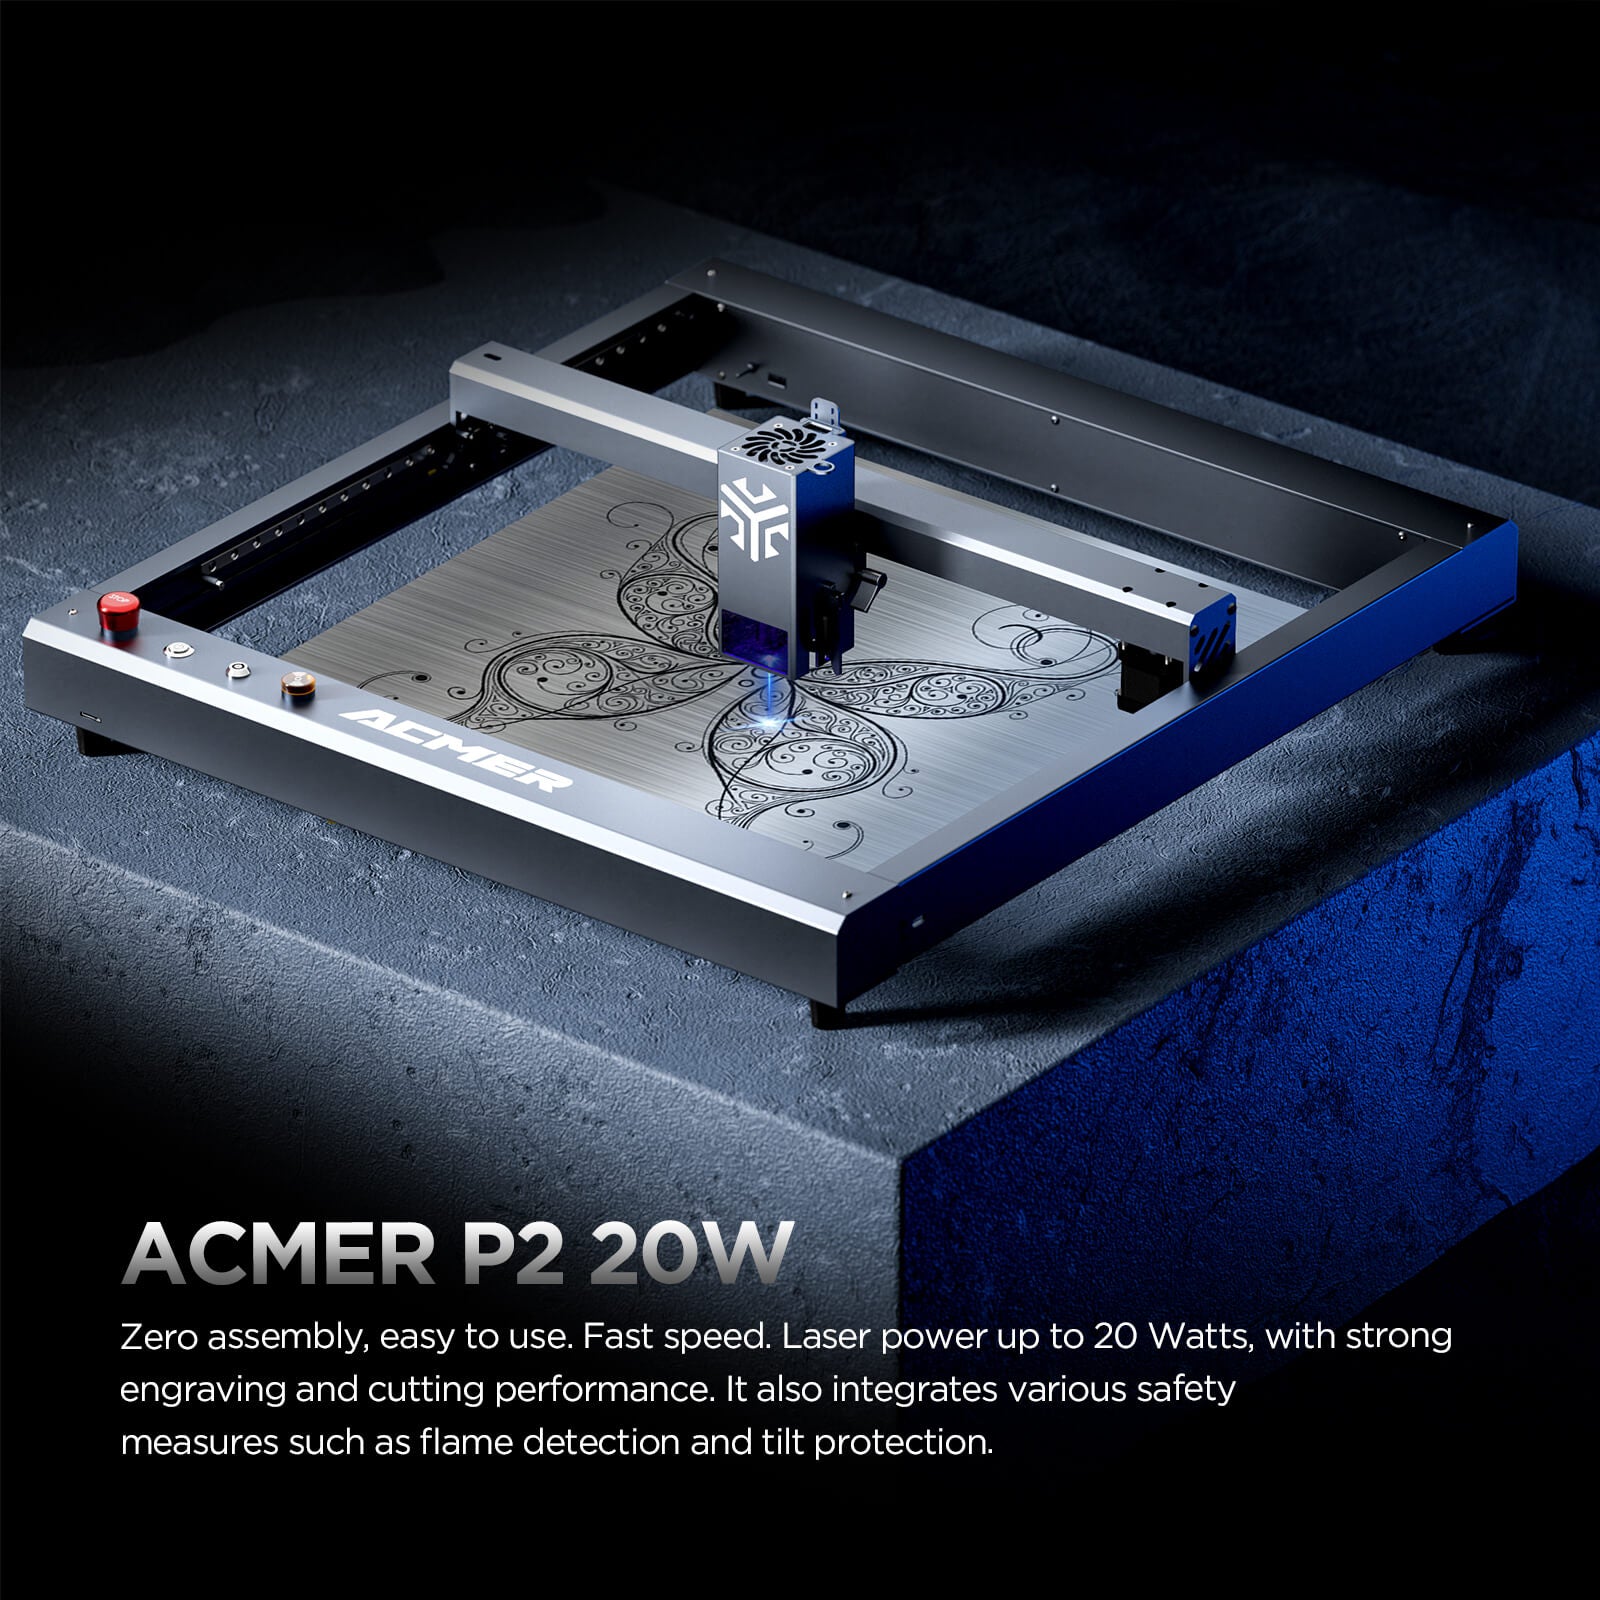 Acmer P2 20W Laser Engraver